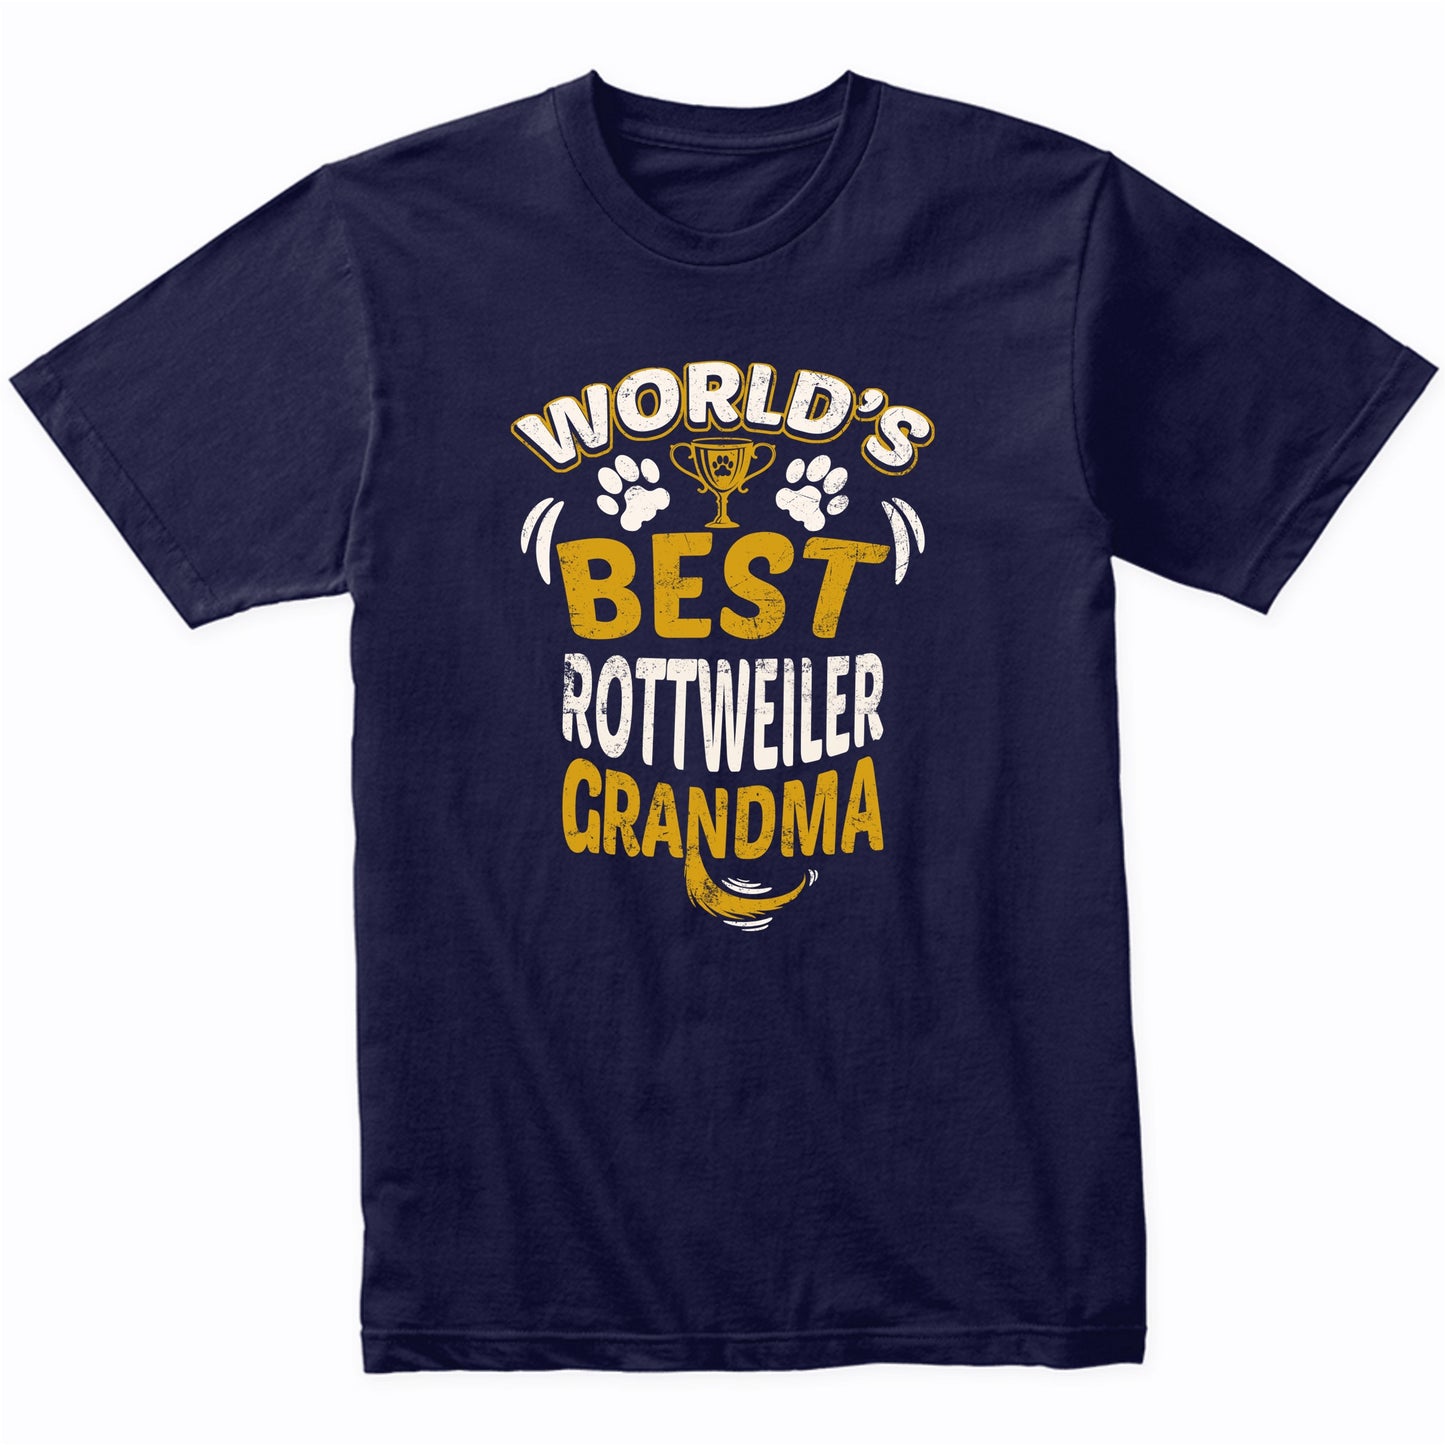 World's Best Rottweiler Grandma Graphic T-Shirt